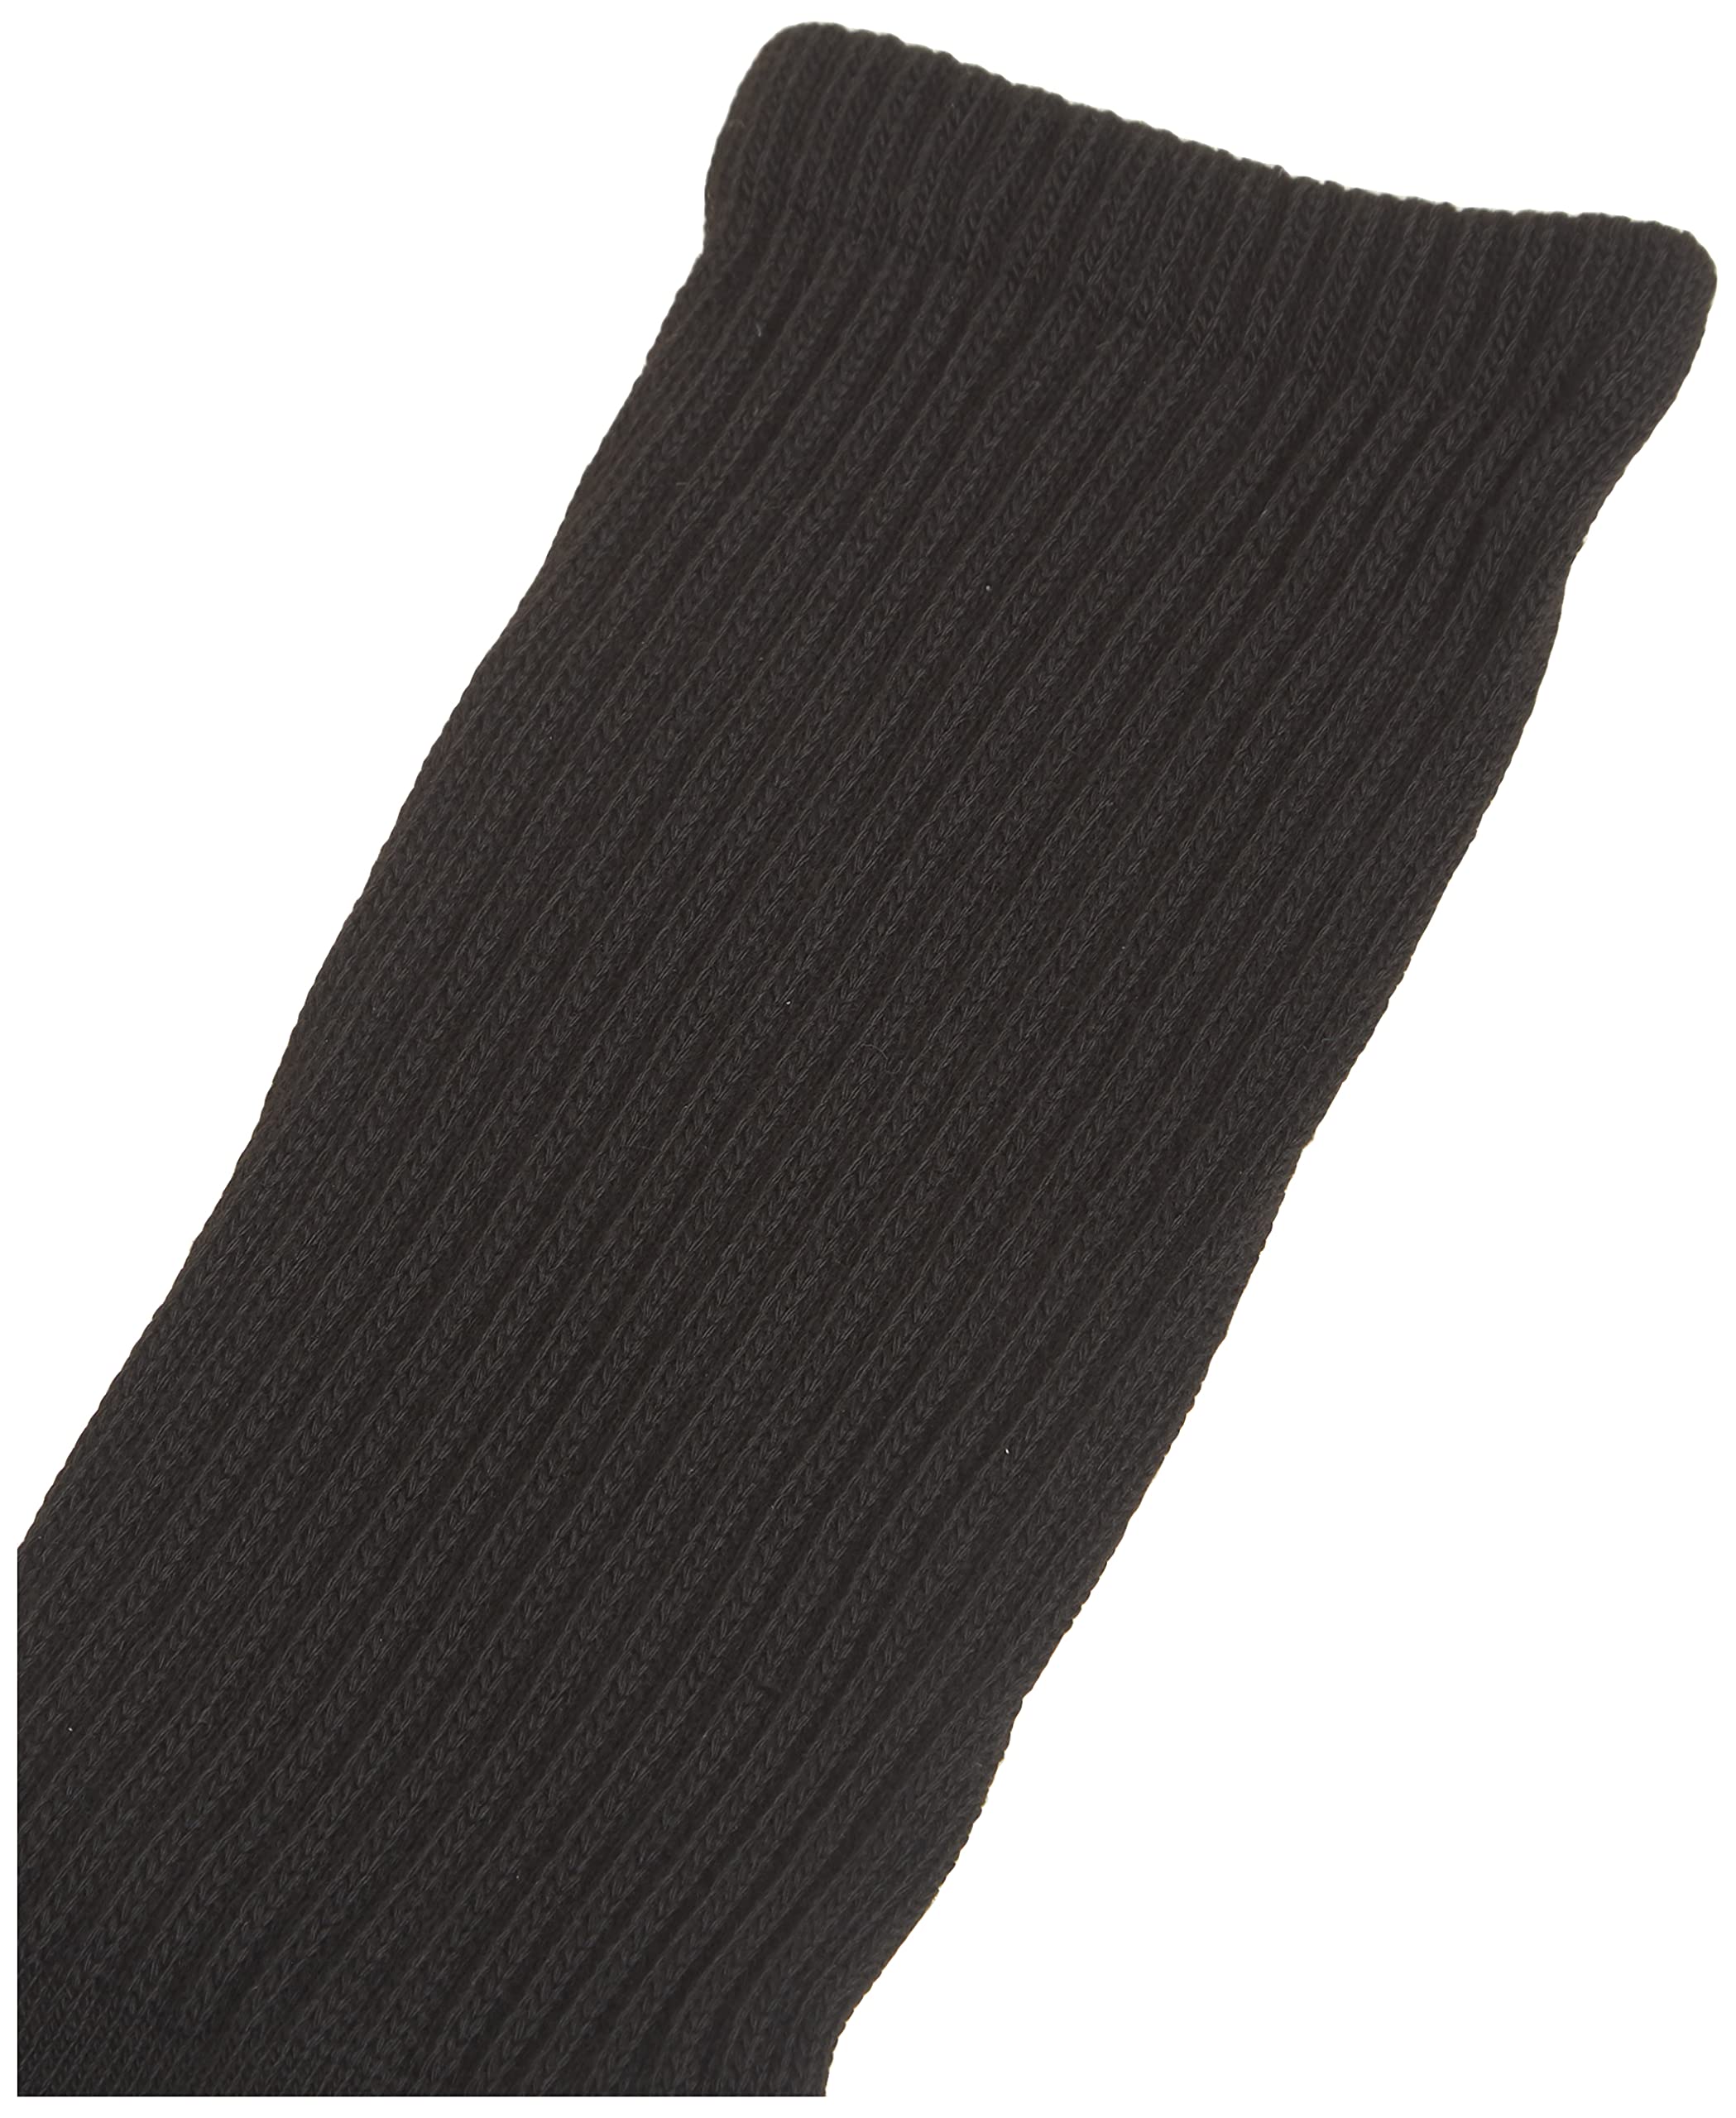 Gildan Men's Polyester Half Cushion Crew Socks, 12-pack